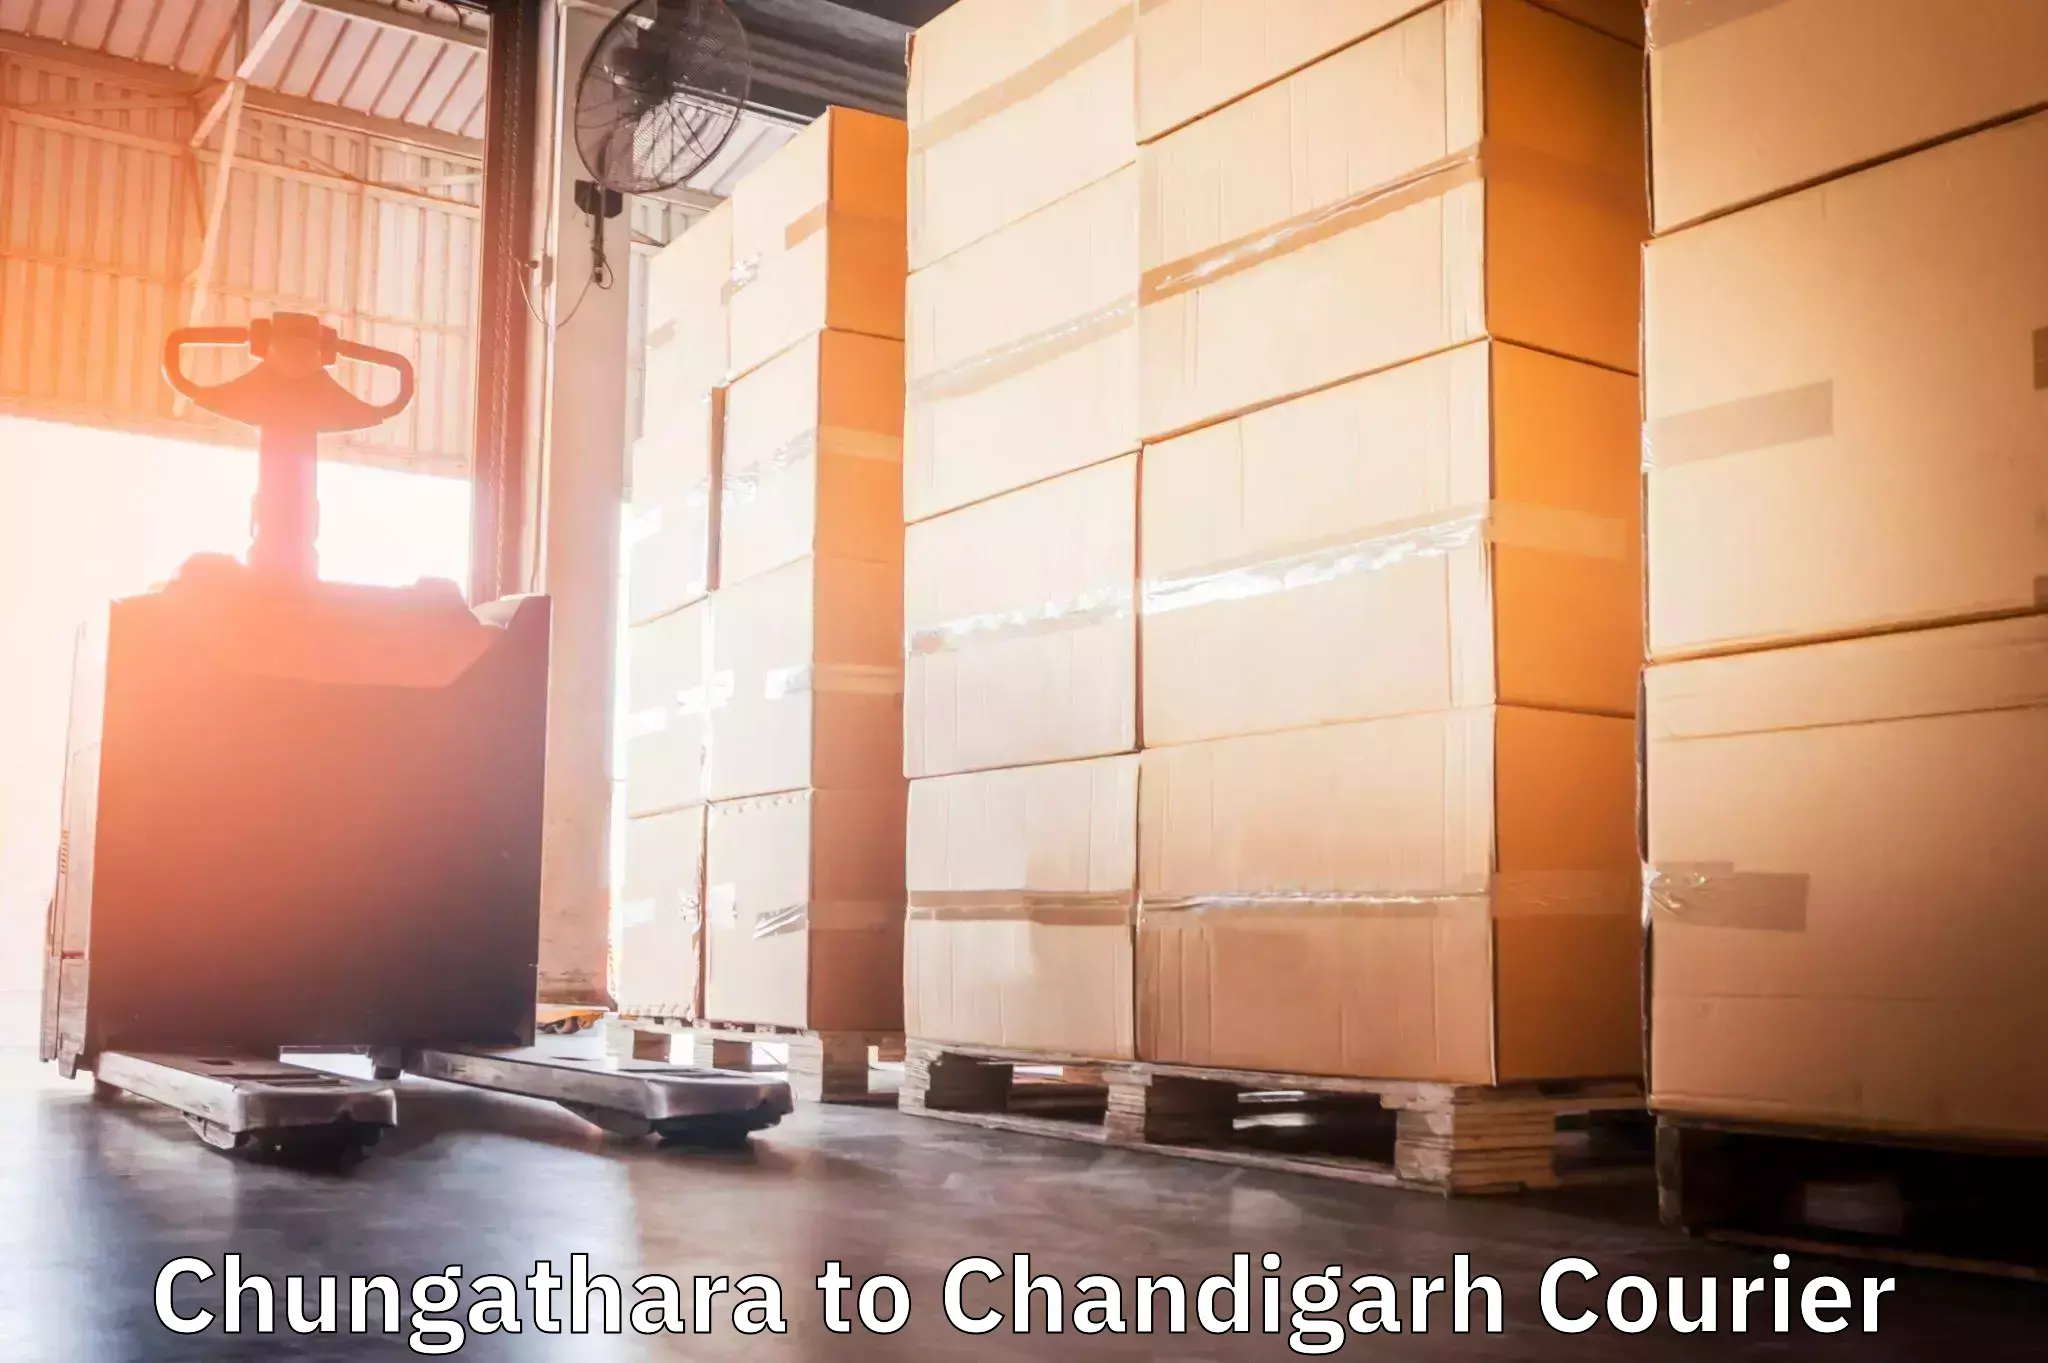 Custom courier packaging Chungathara to Chandigarh